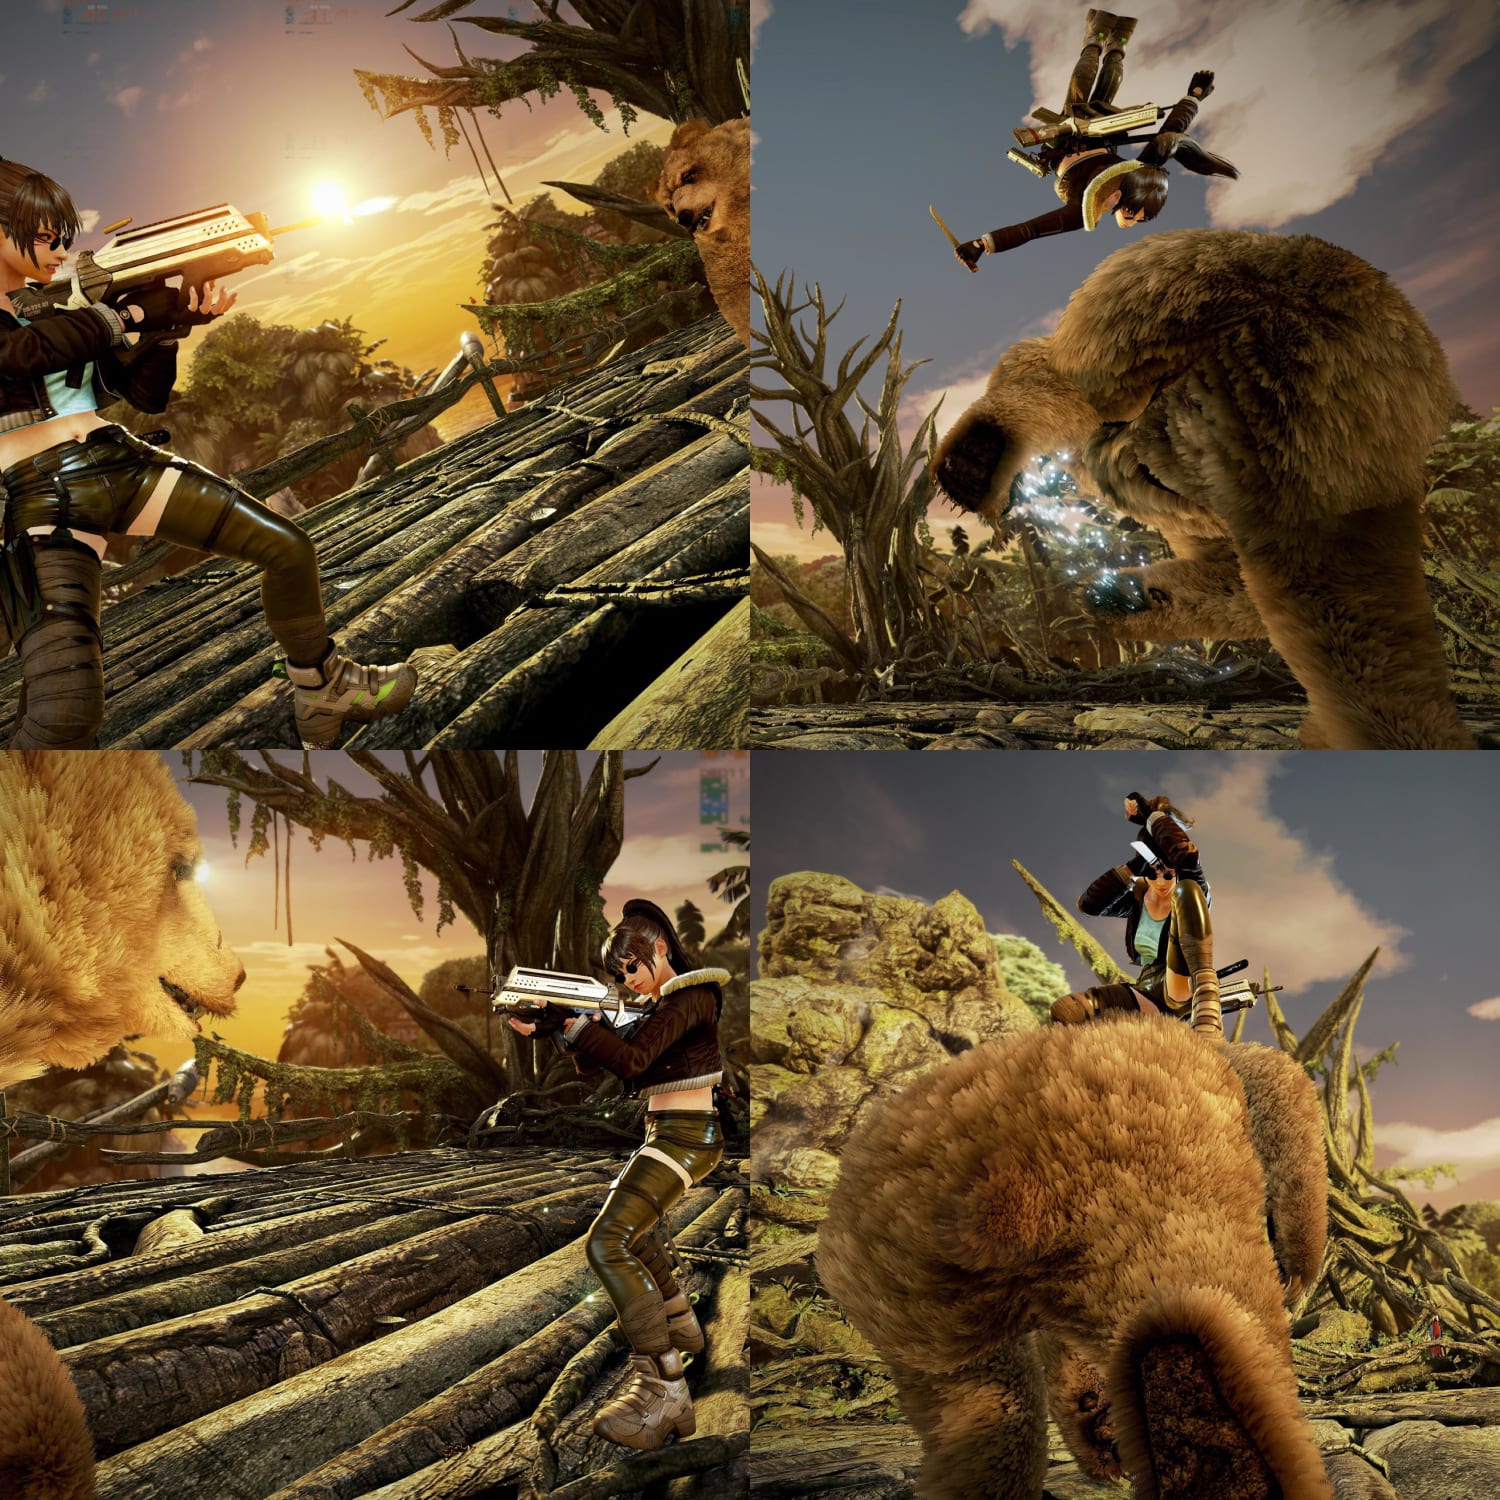 Lara Croft defends herself from a wild bear